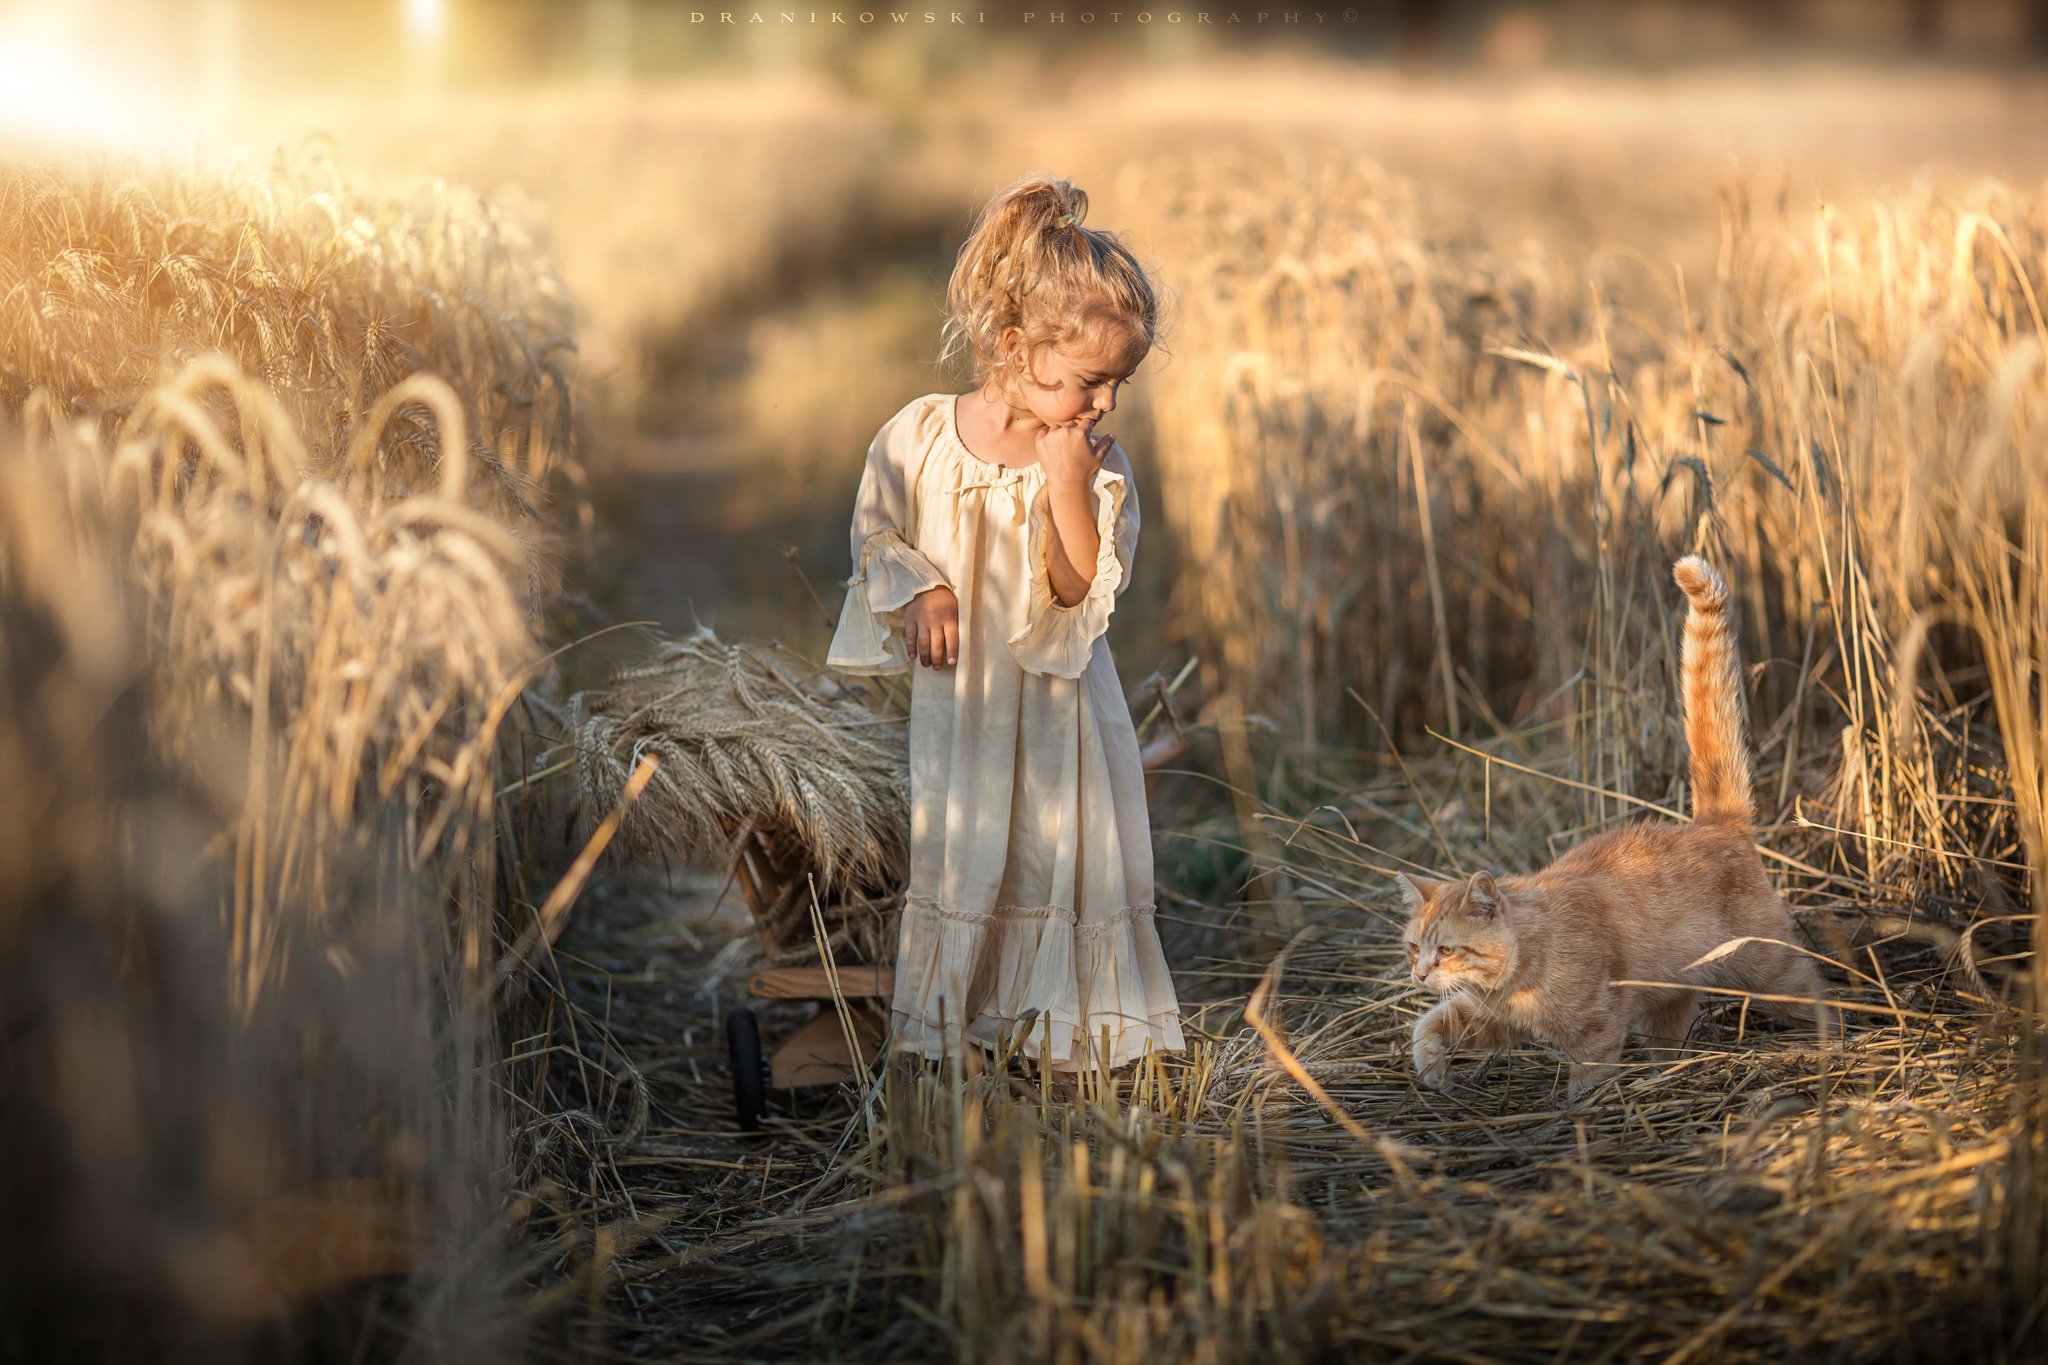 сбор урожая с кошкой harvest cat little girl grain sunlight marie dranikowski 135mm cute dziewczynka, Radoslaw Dranikowski